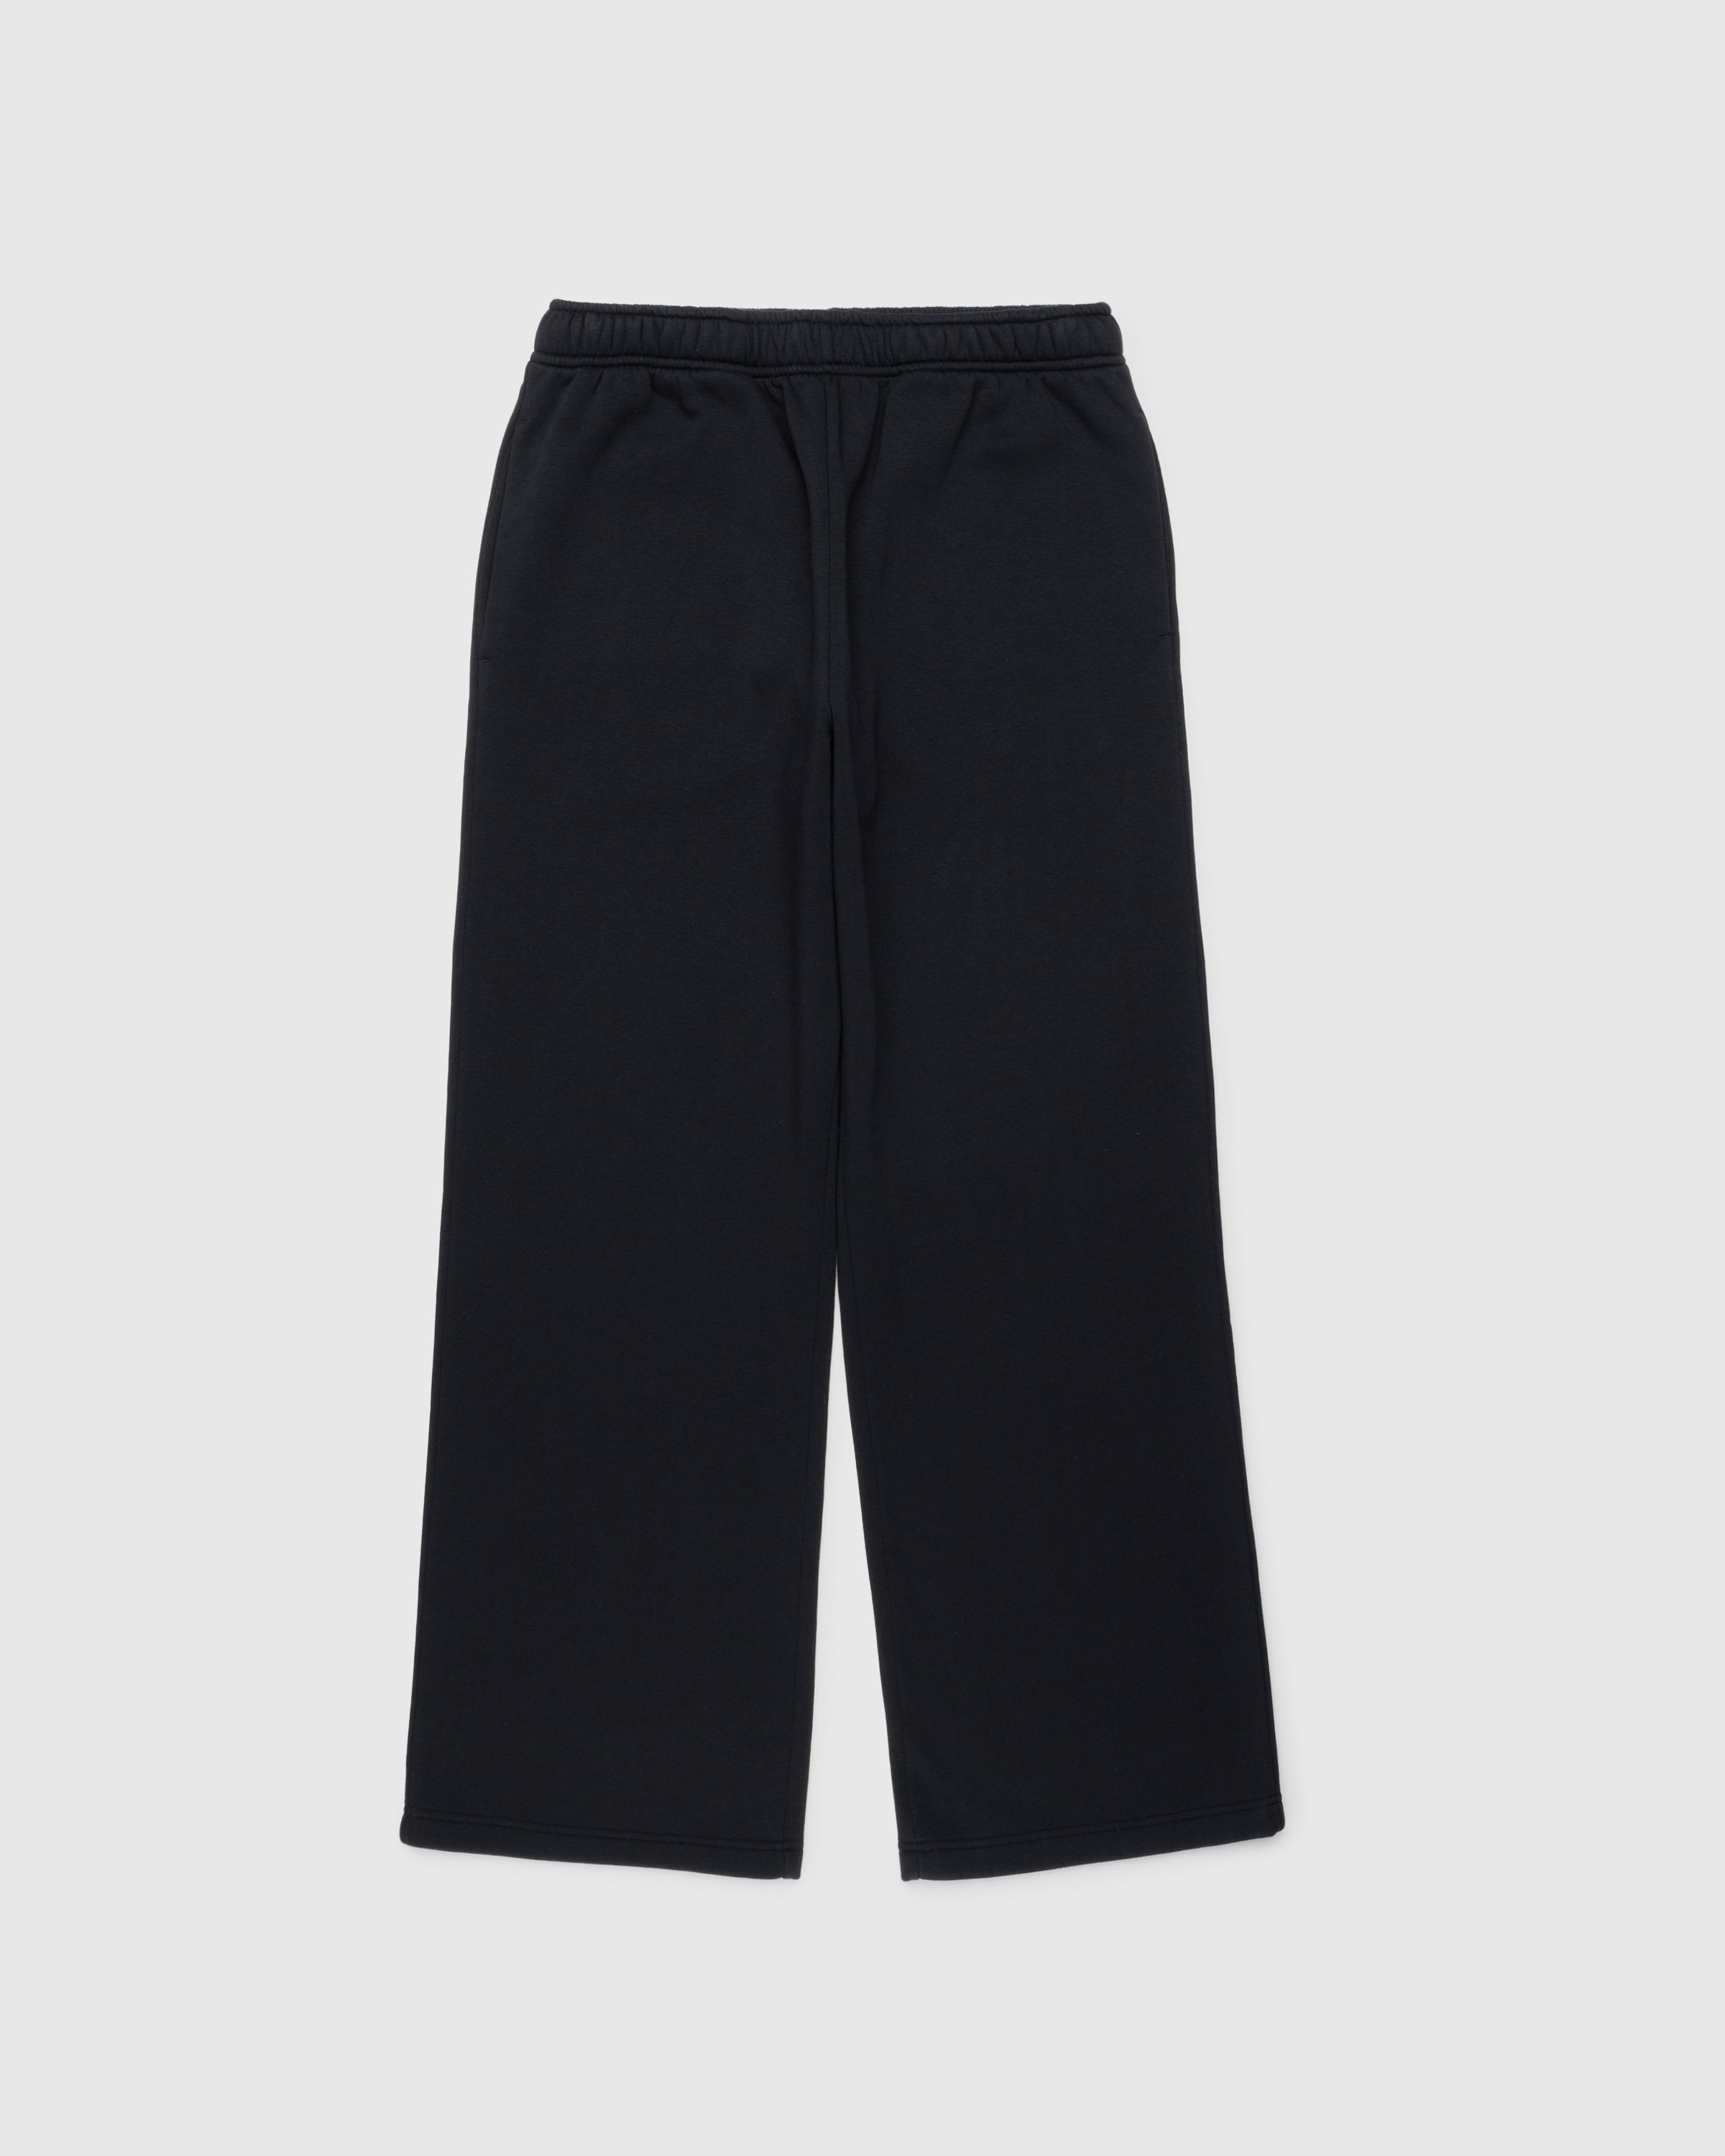 Acne Studios - Cotton Sweatpants Black - Clothing - Black - Image 1